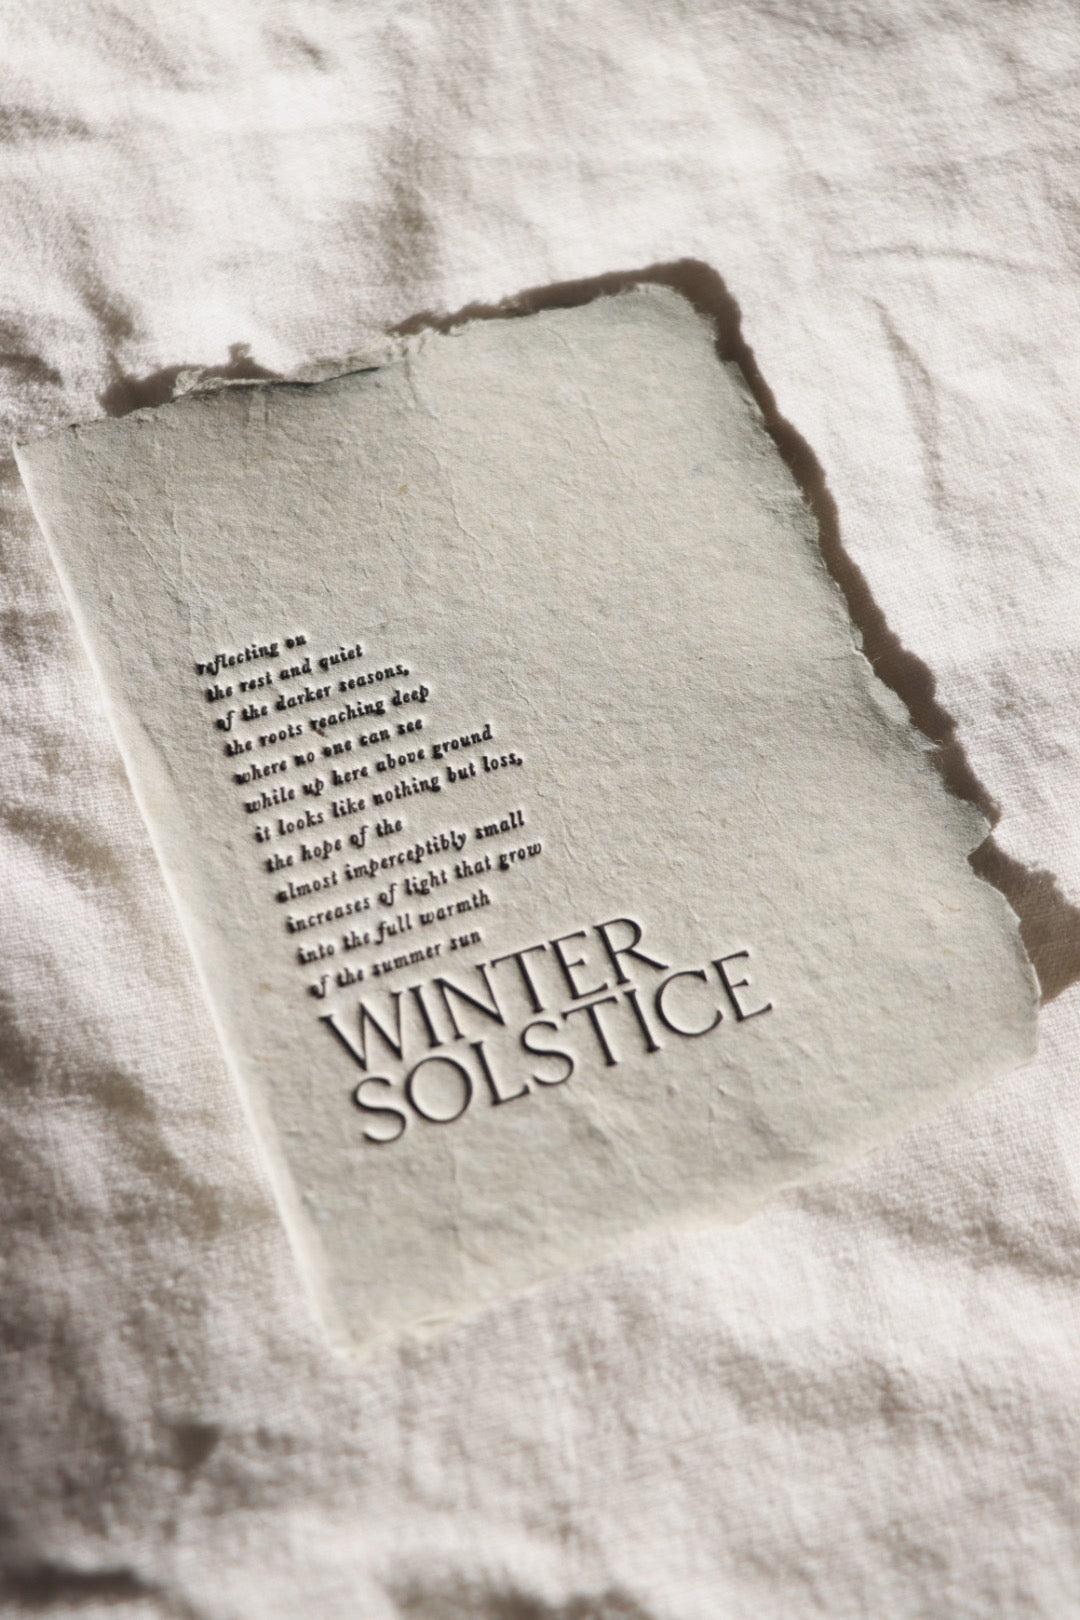 Winter Solstice Card